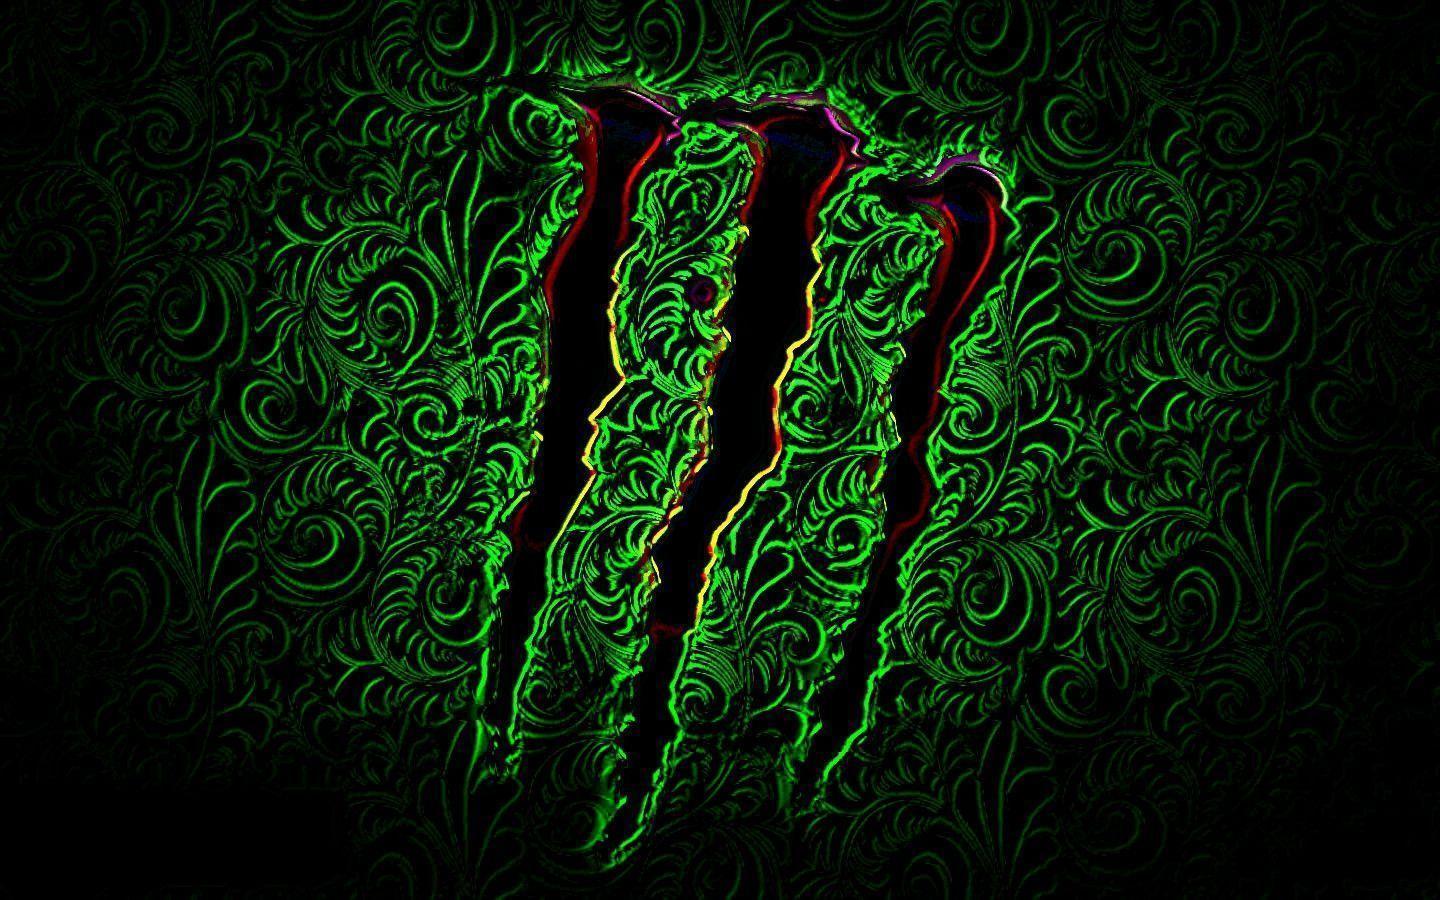 monster energy drink symbol